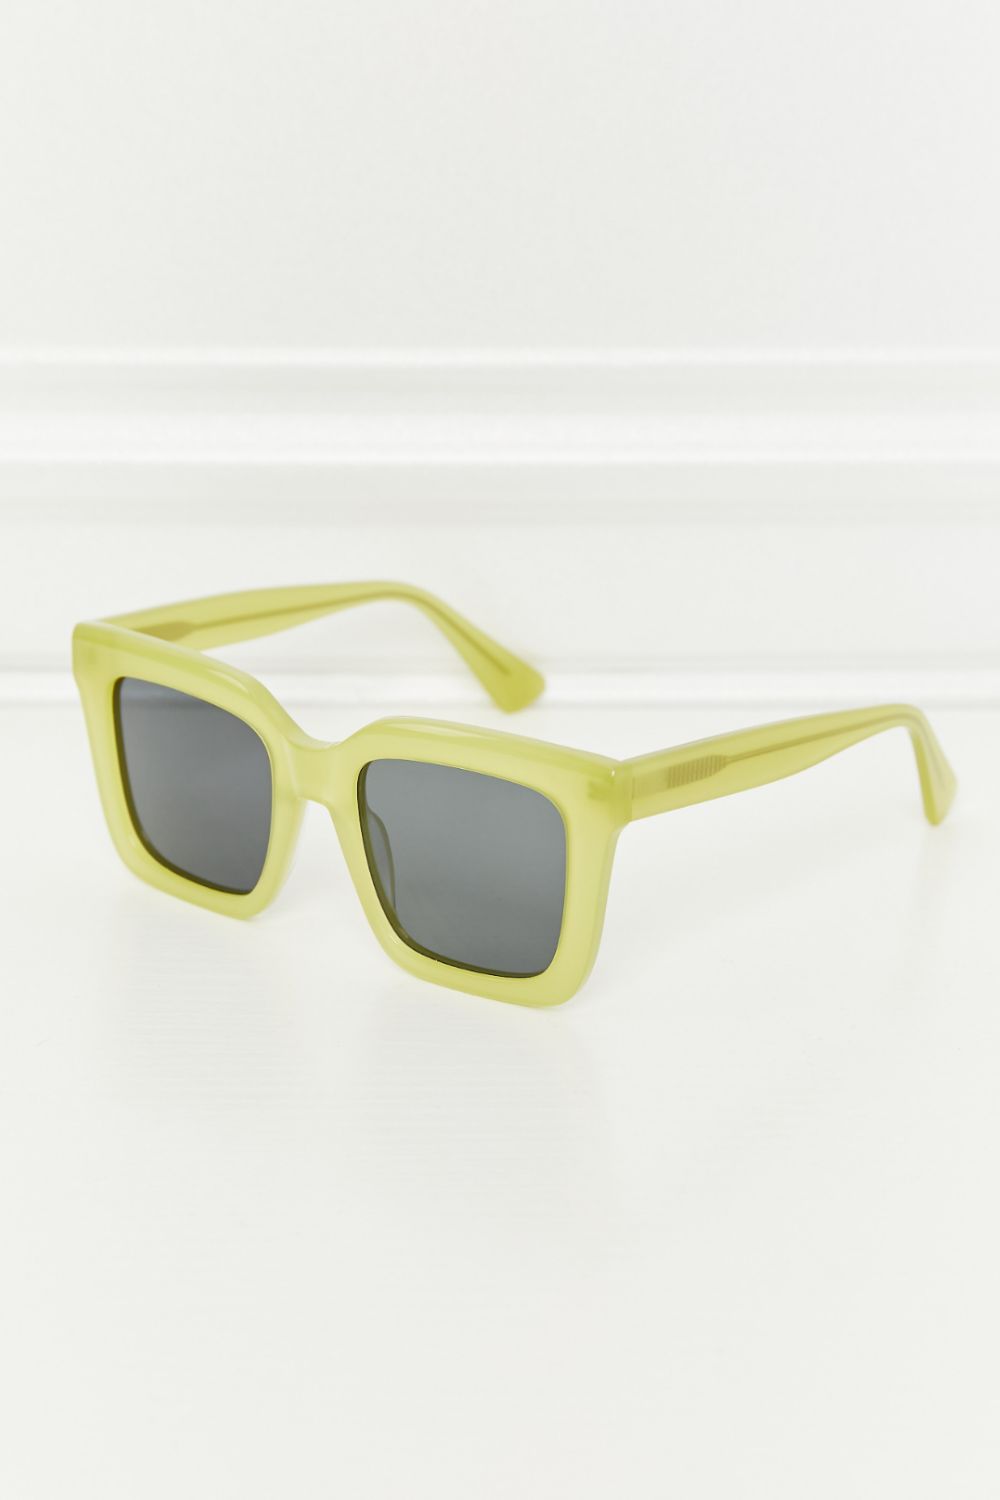 Square TAC Polarization Lens Sunglasses Print on any thing USA/STOD clothes